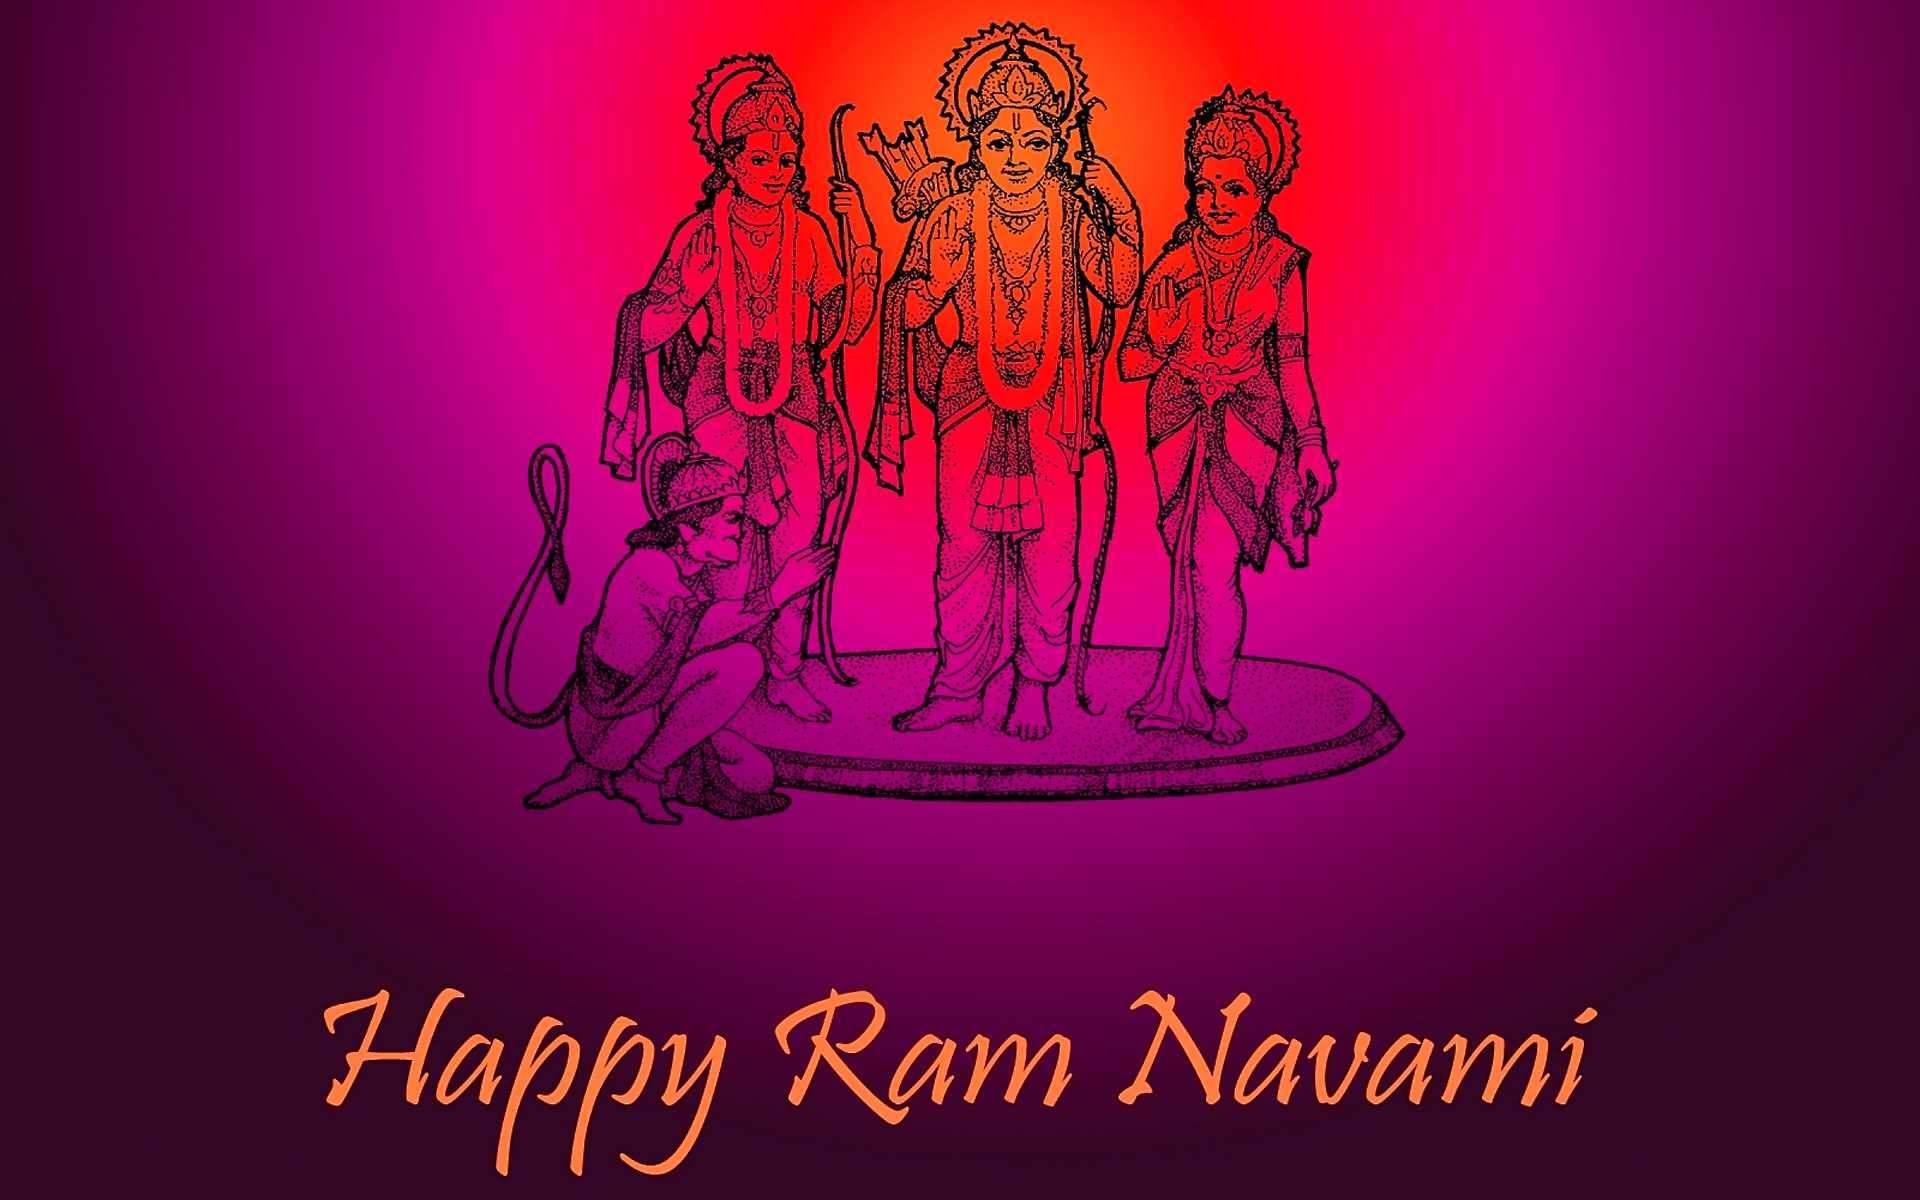 Happy Ram Navami Wishes Image